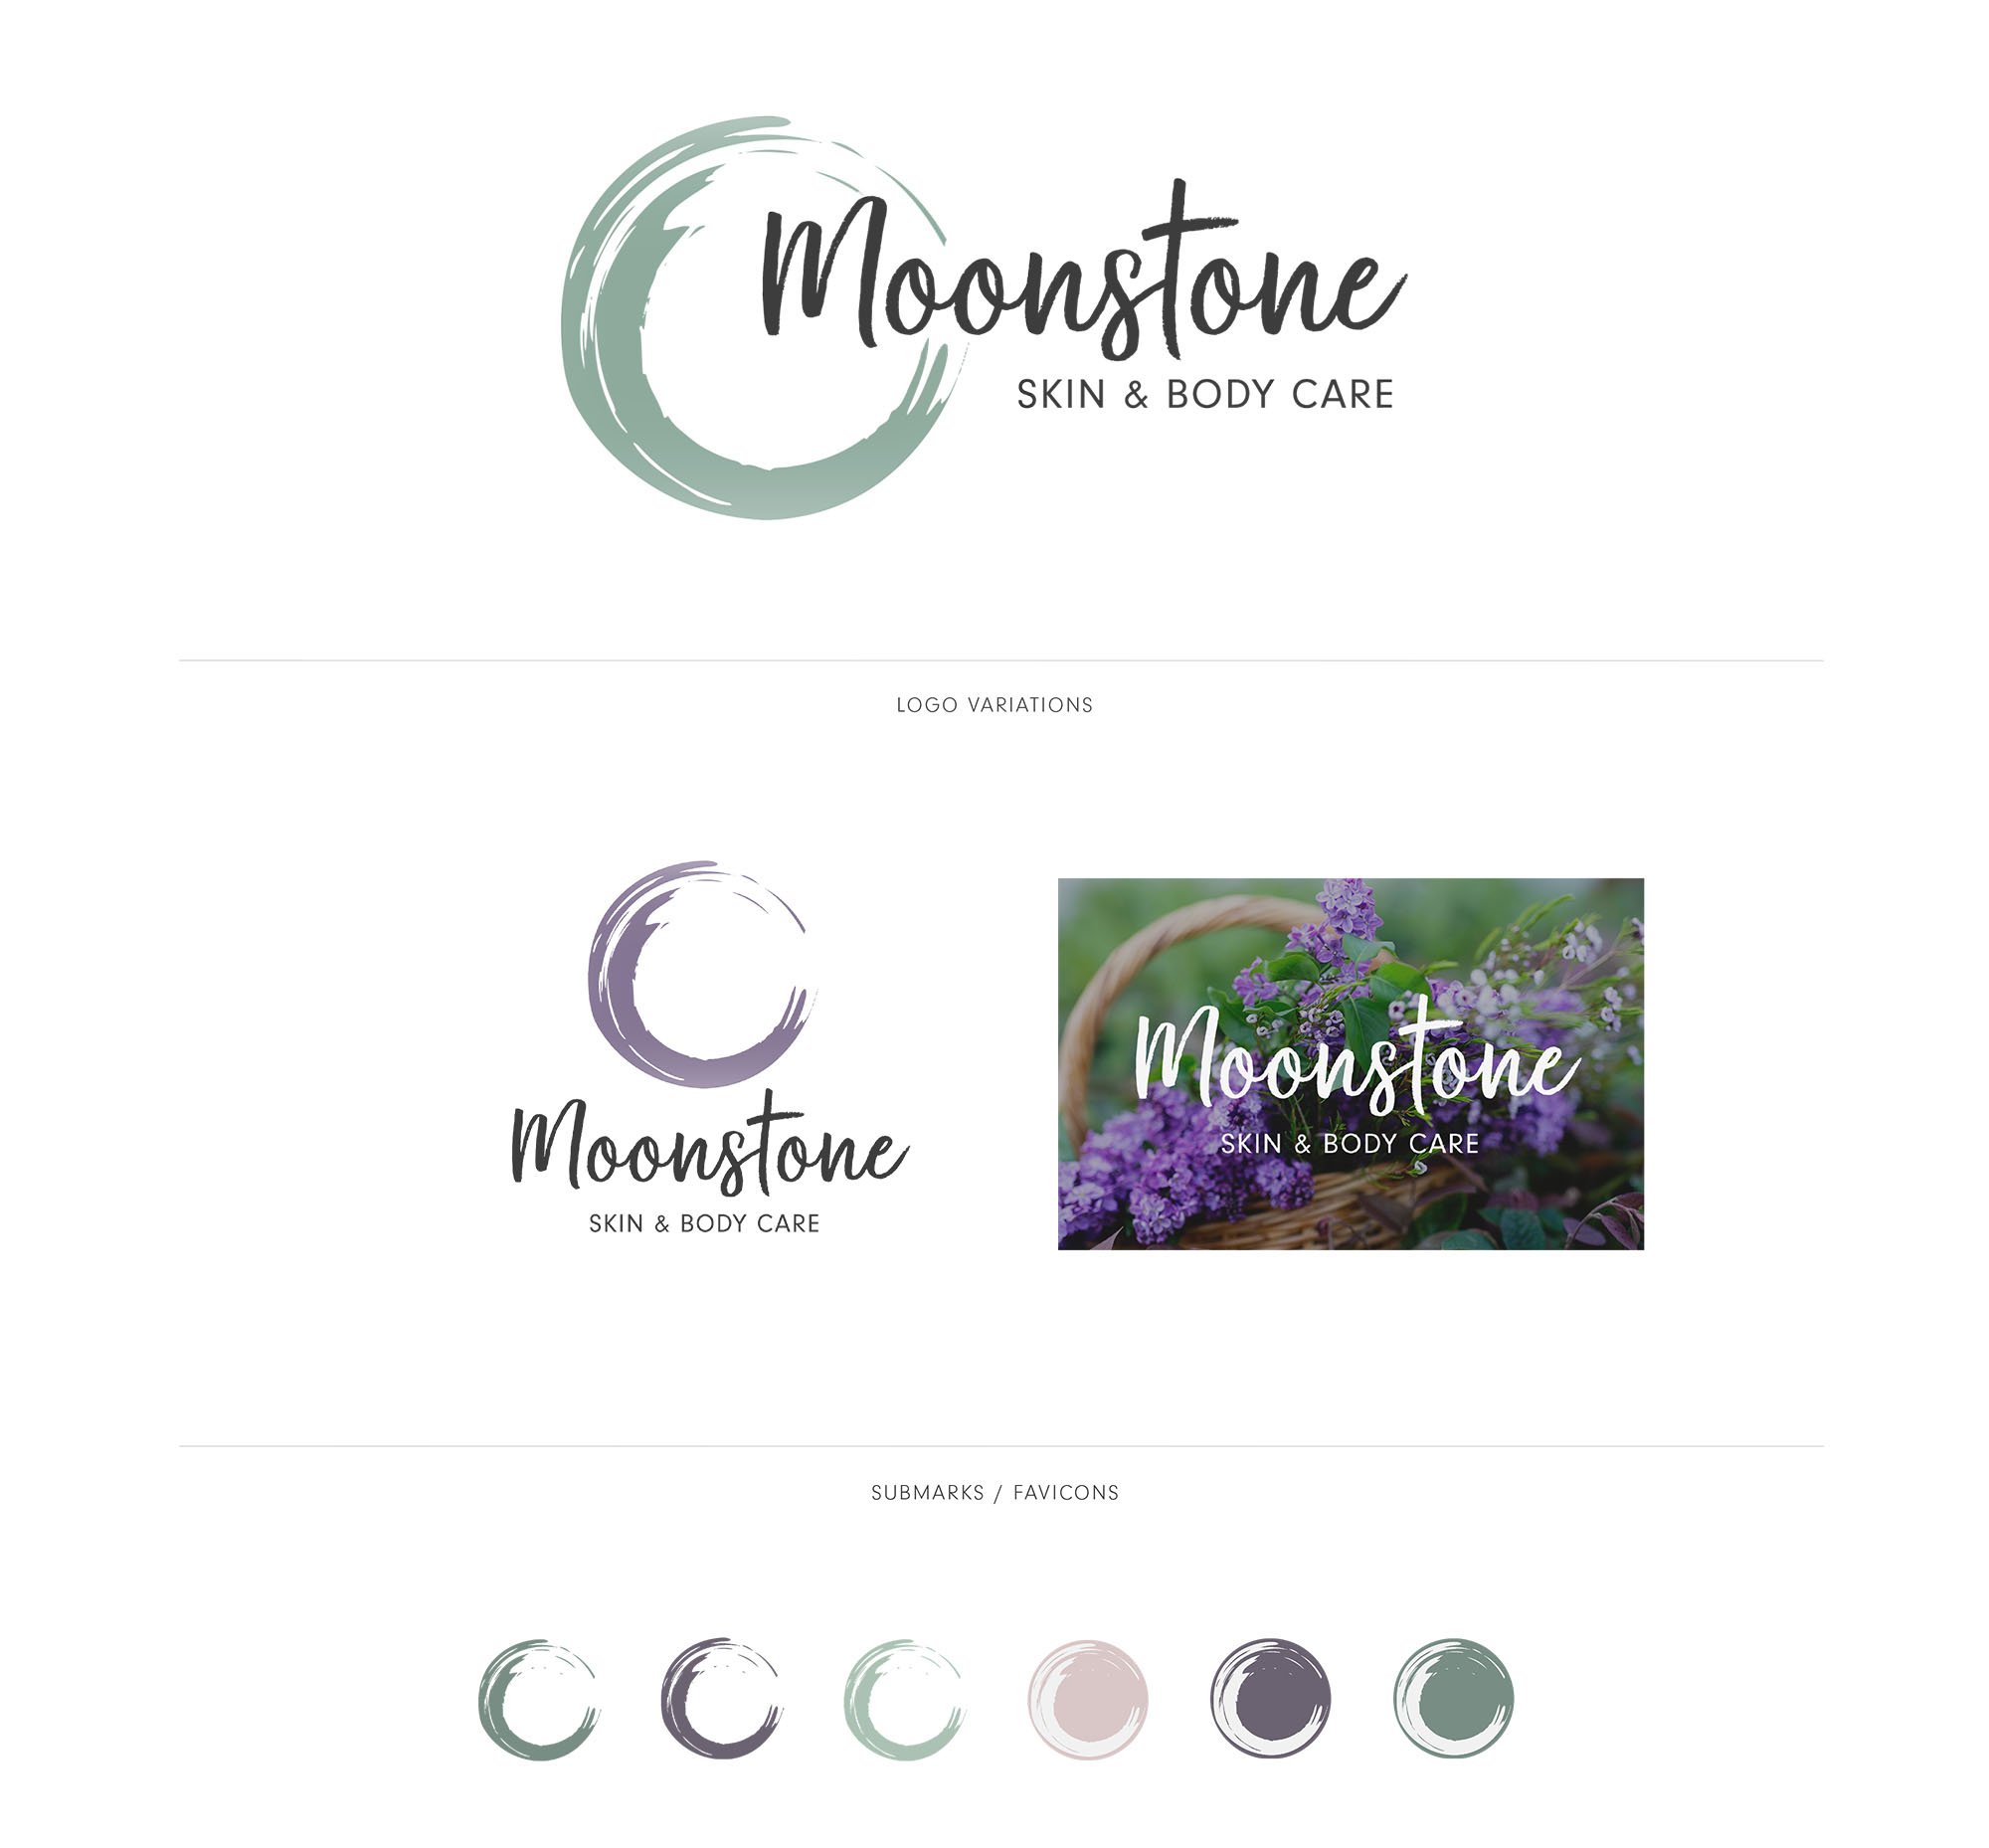 moonstone-skin-care-logos.jpg